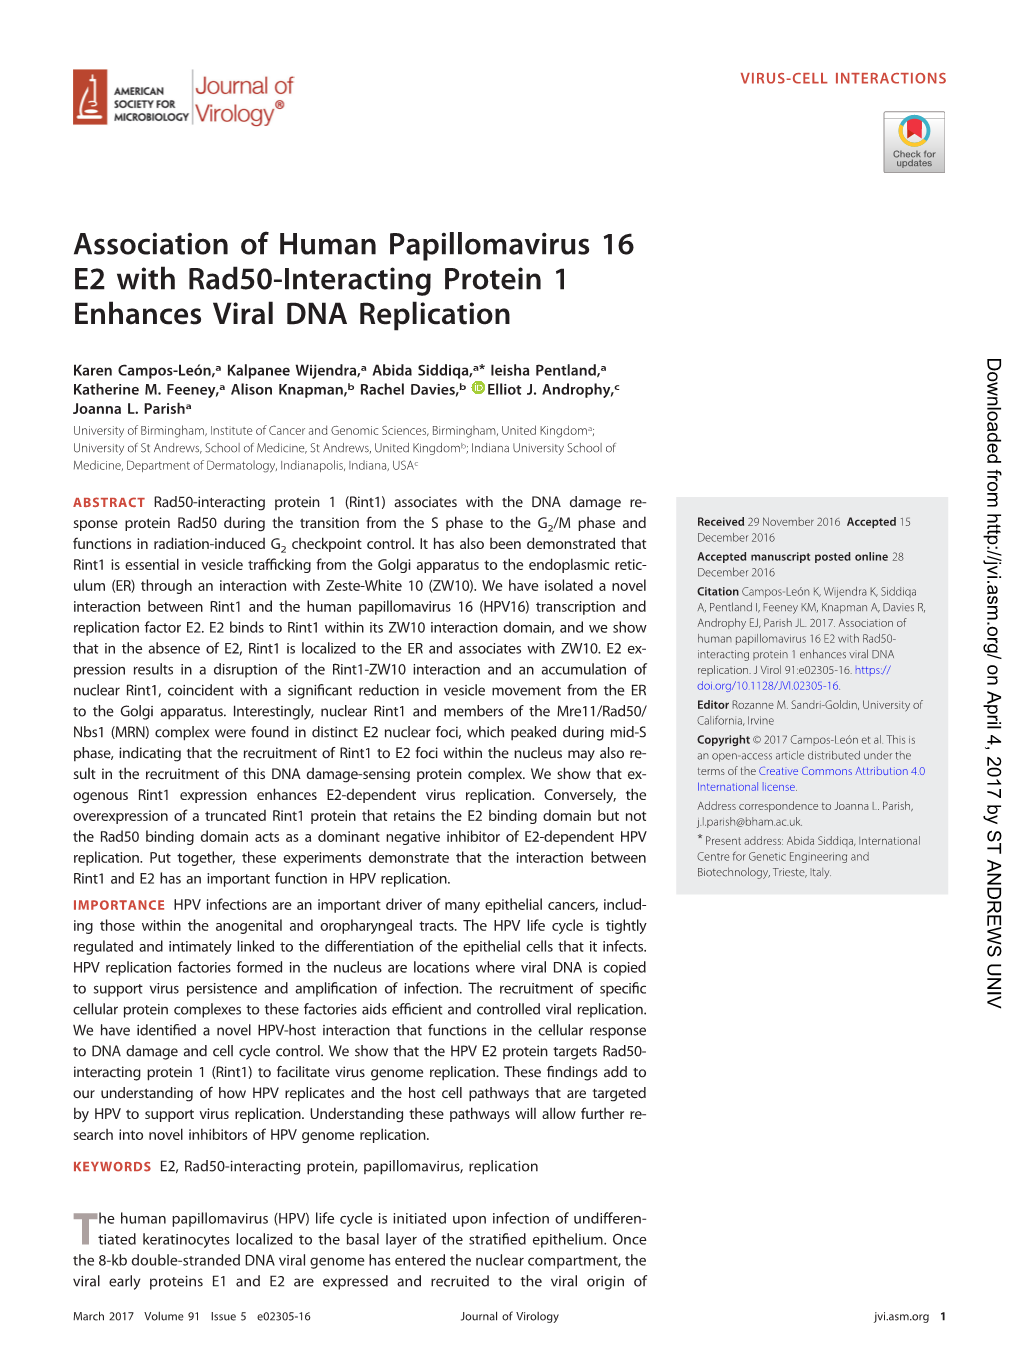 Association of Human Papillomavirus 16 E2 with Rad50-Interacting